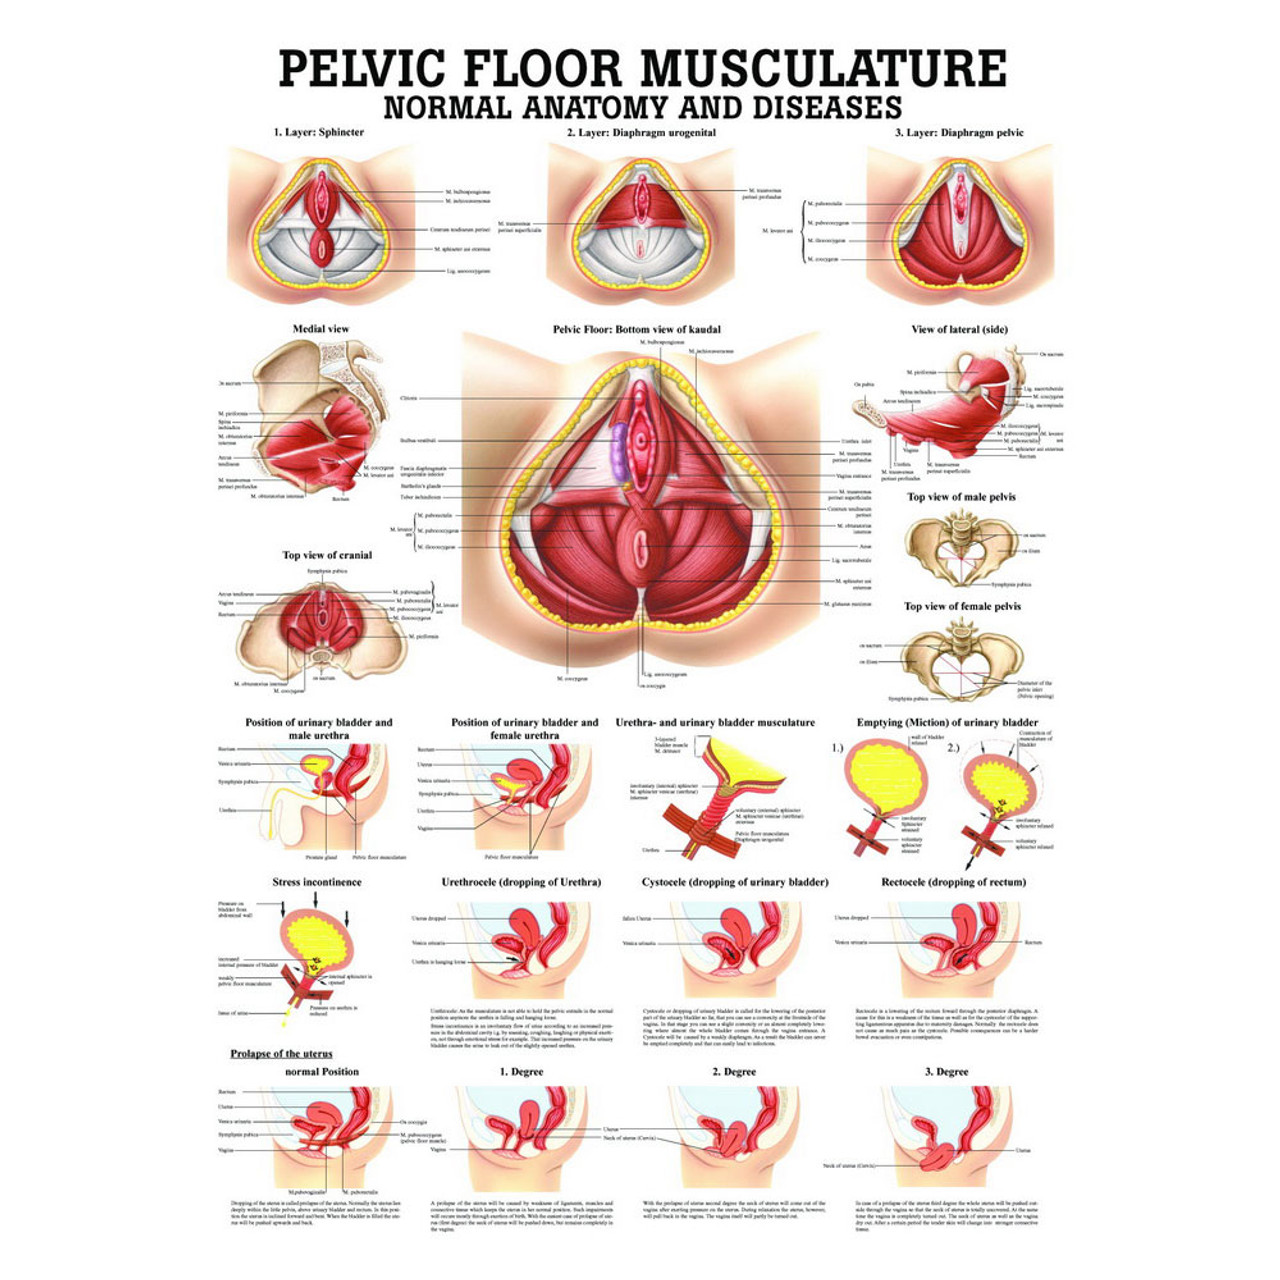 Pelvic Floor Musculature Poster - Normal Anatomy and Diseases